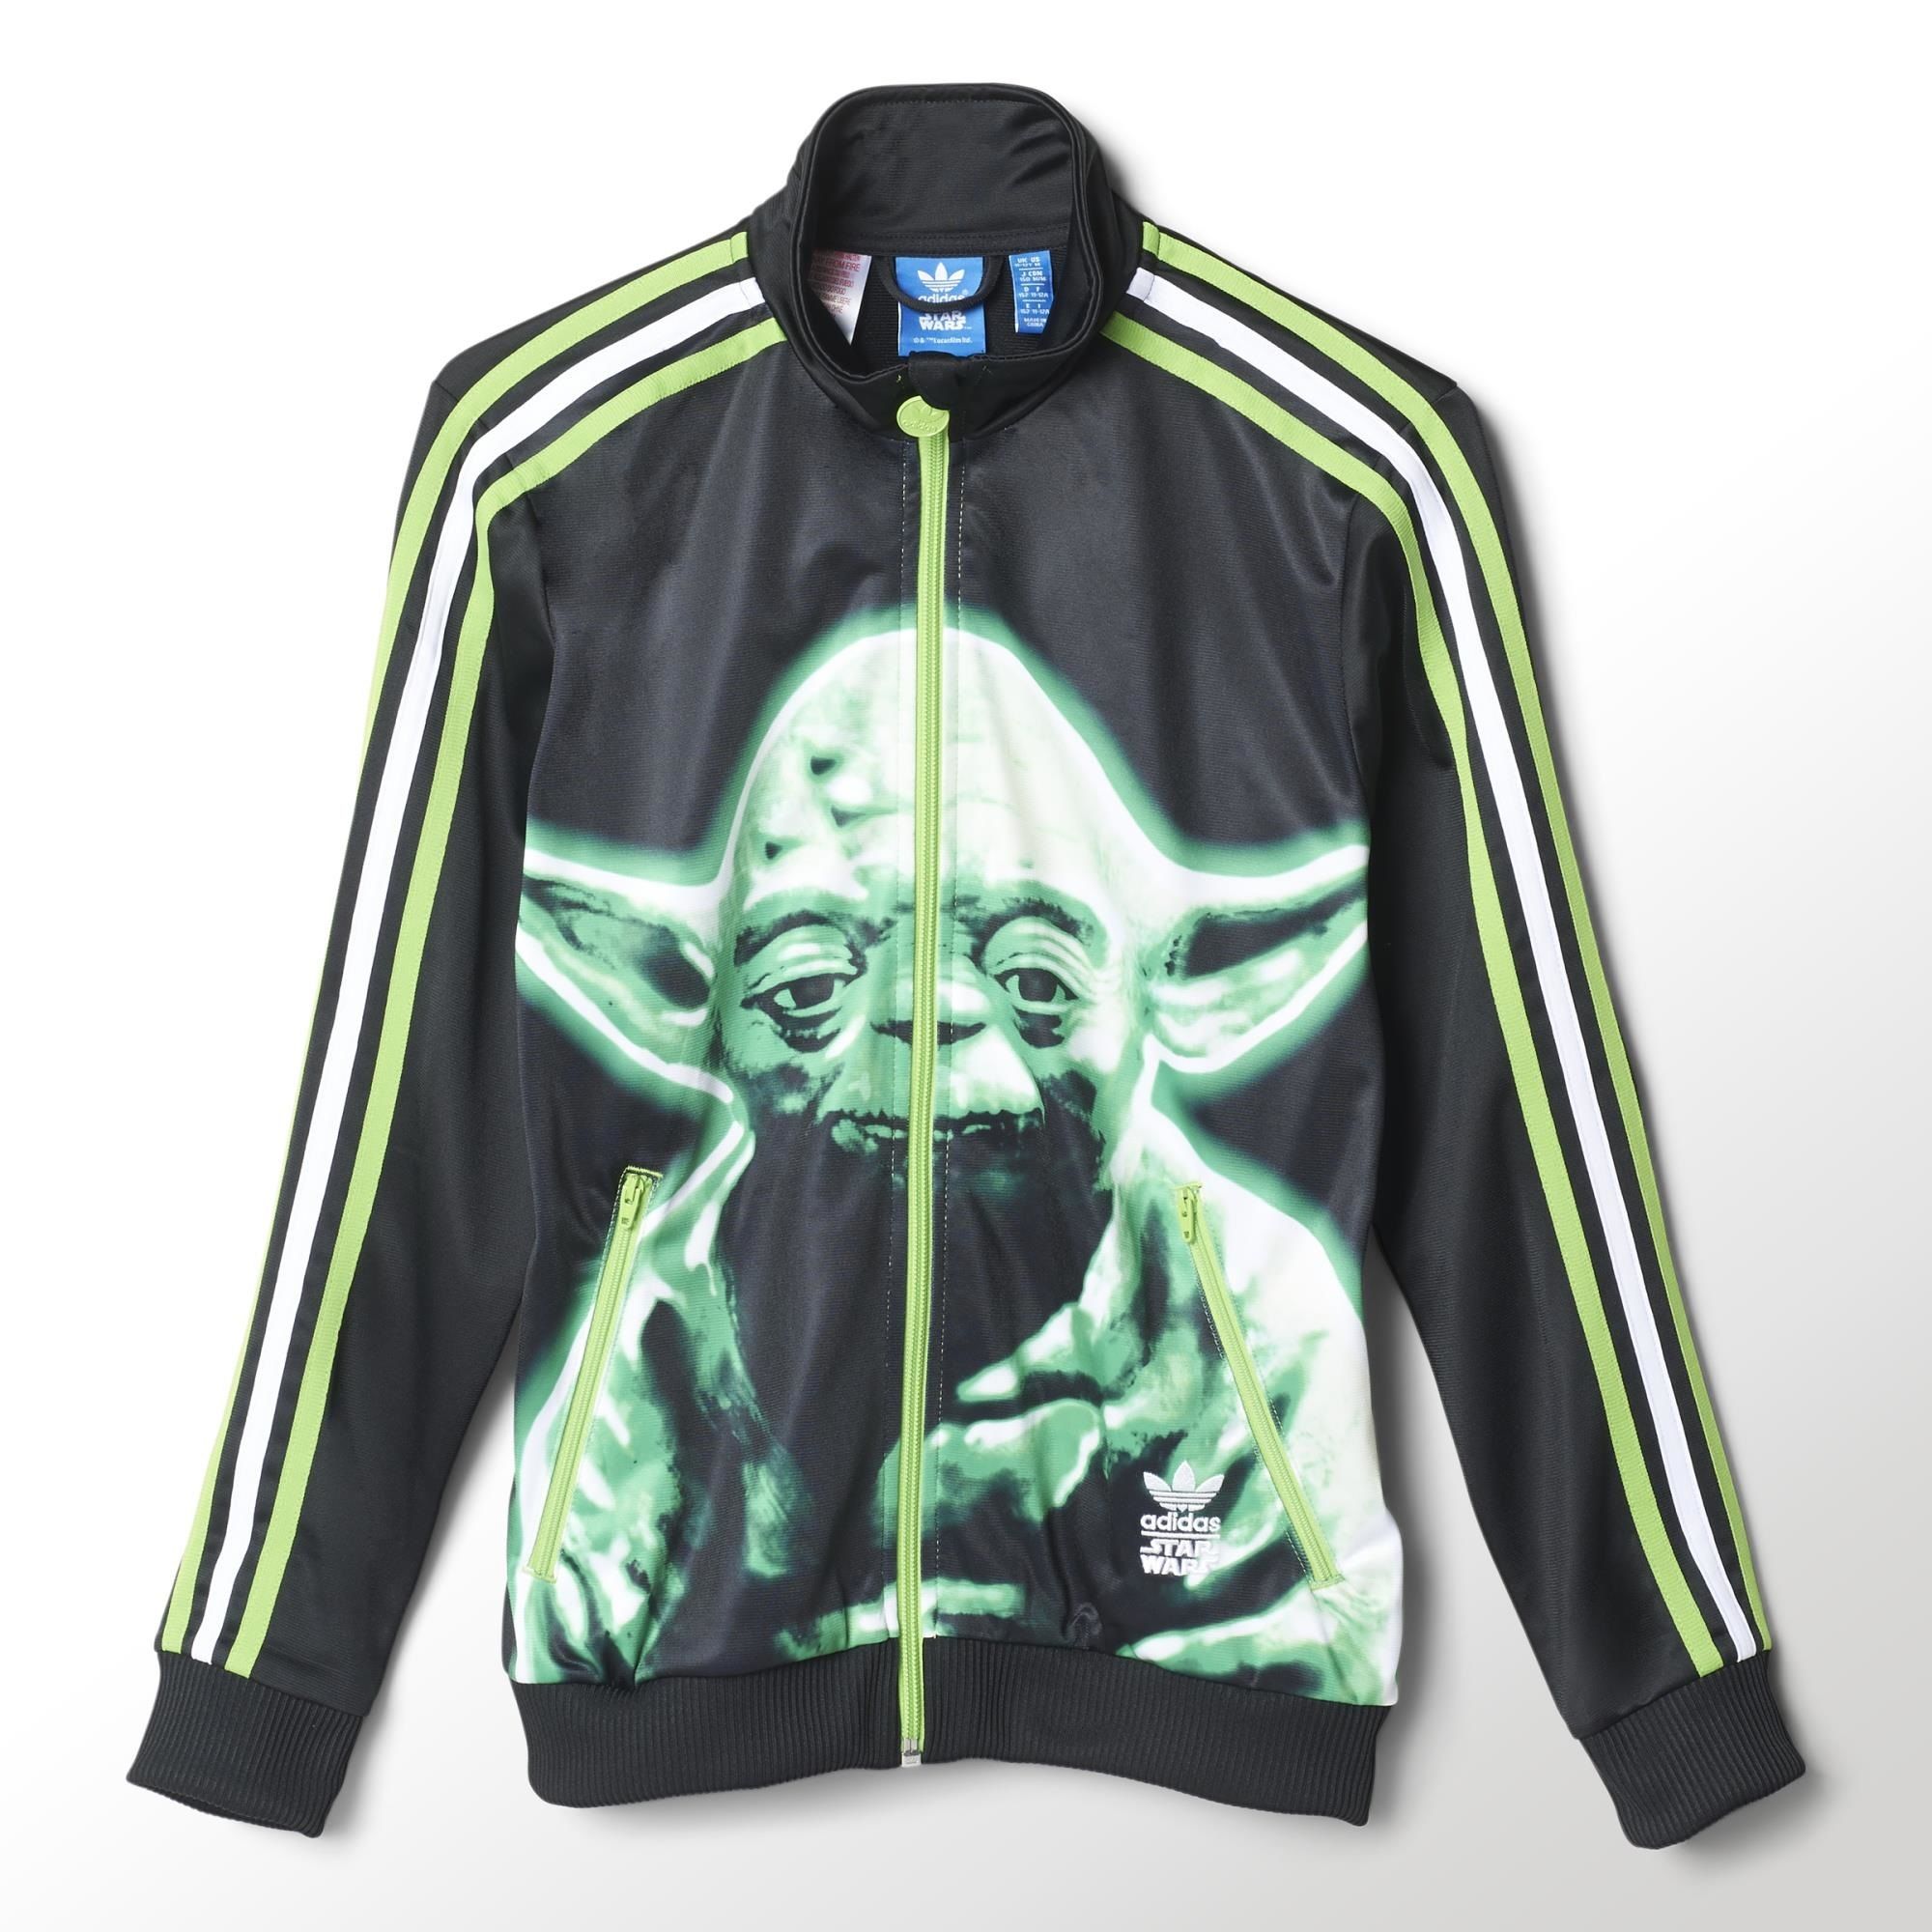 superávit físico transportar Adidas Originals Chaqueta Niño FB Star Wars Master Yoda (negro/